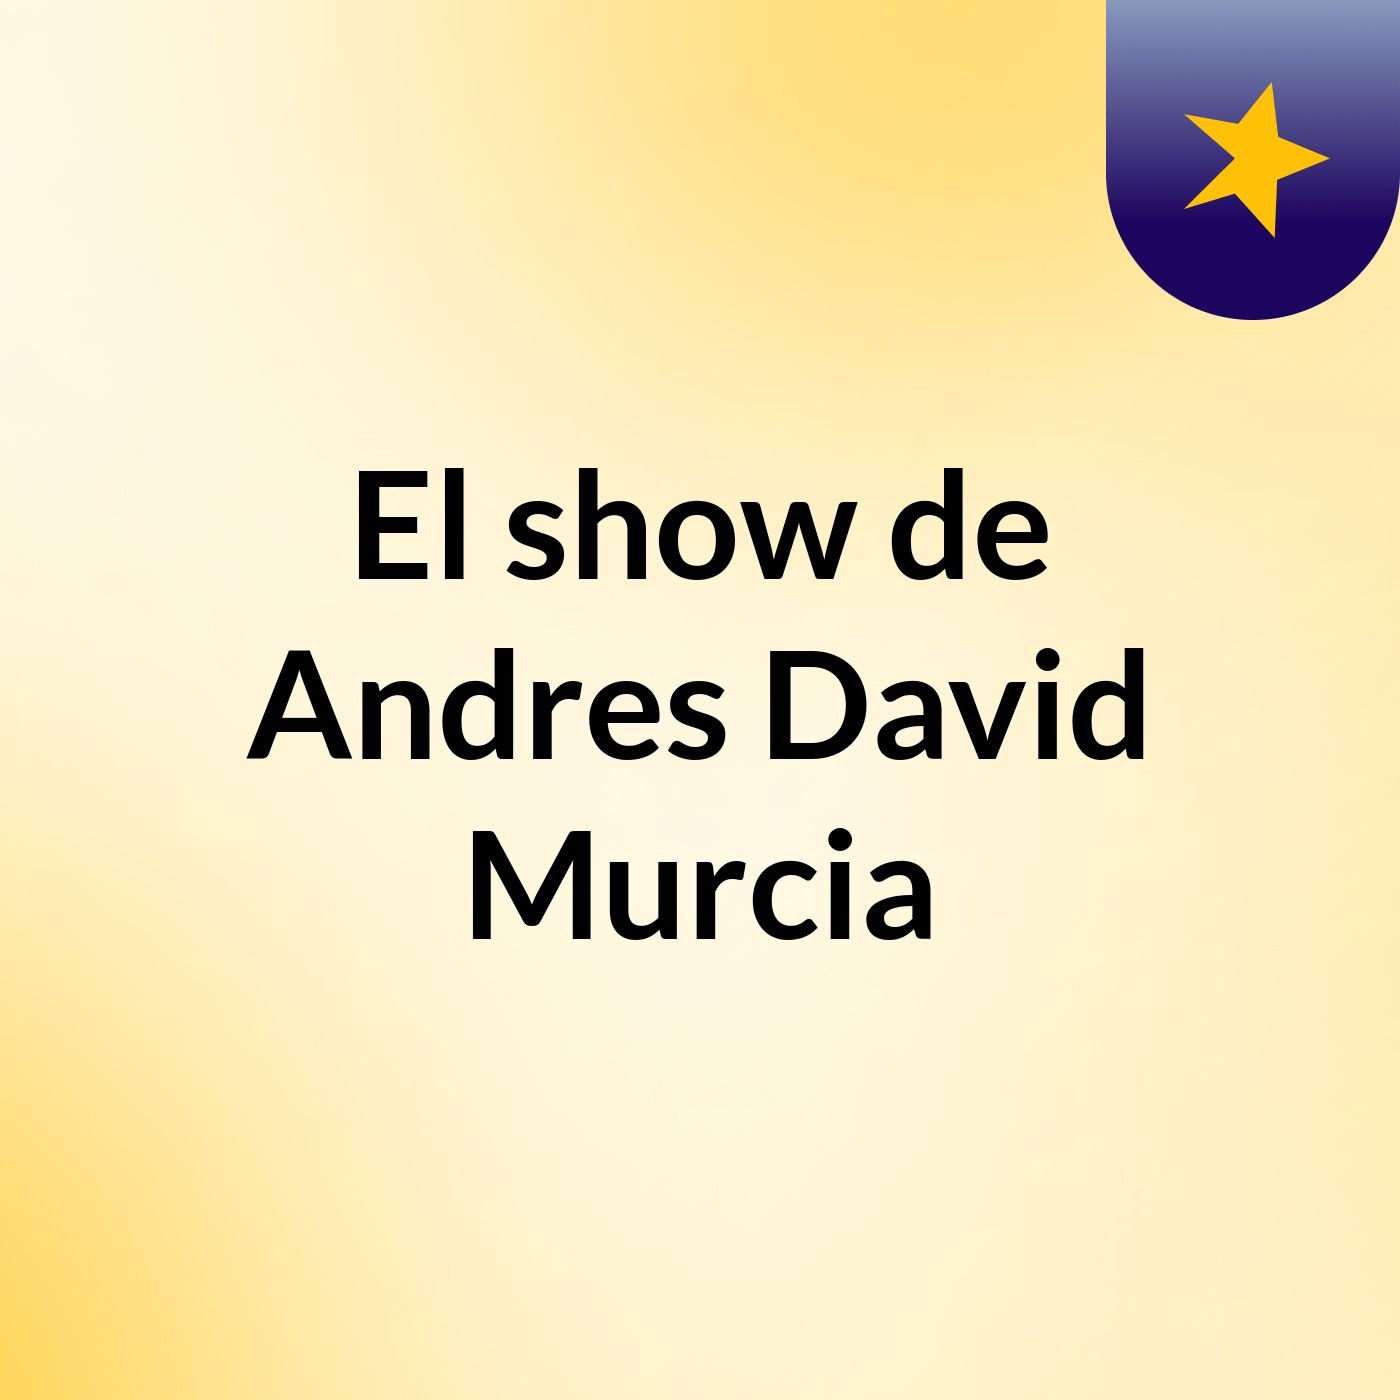 El show de Andres David Murcia